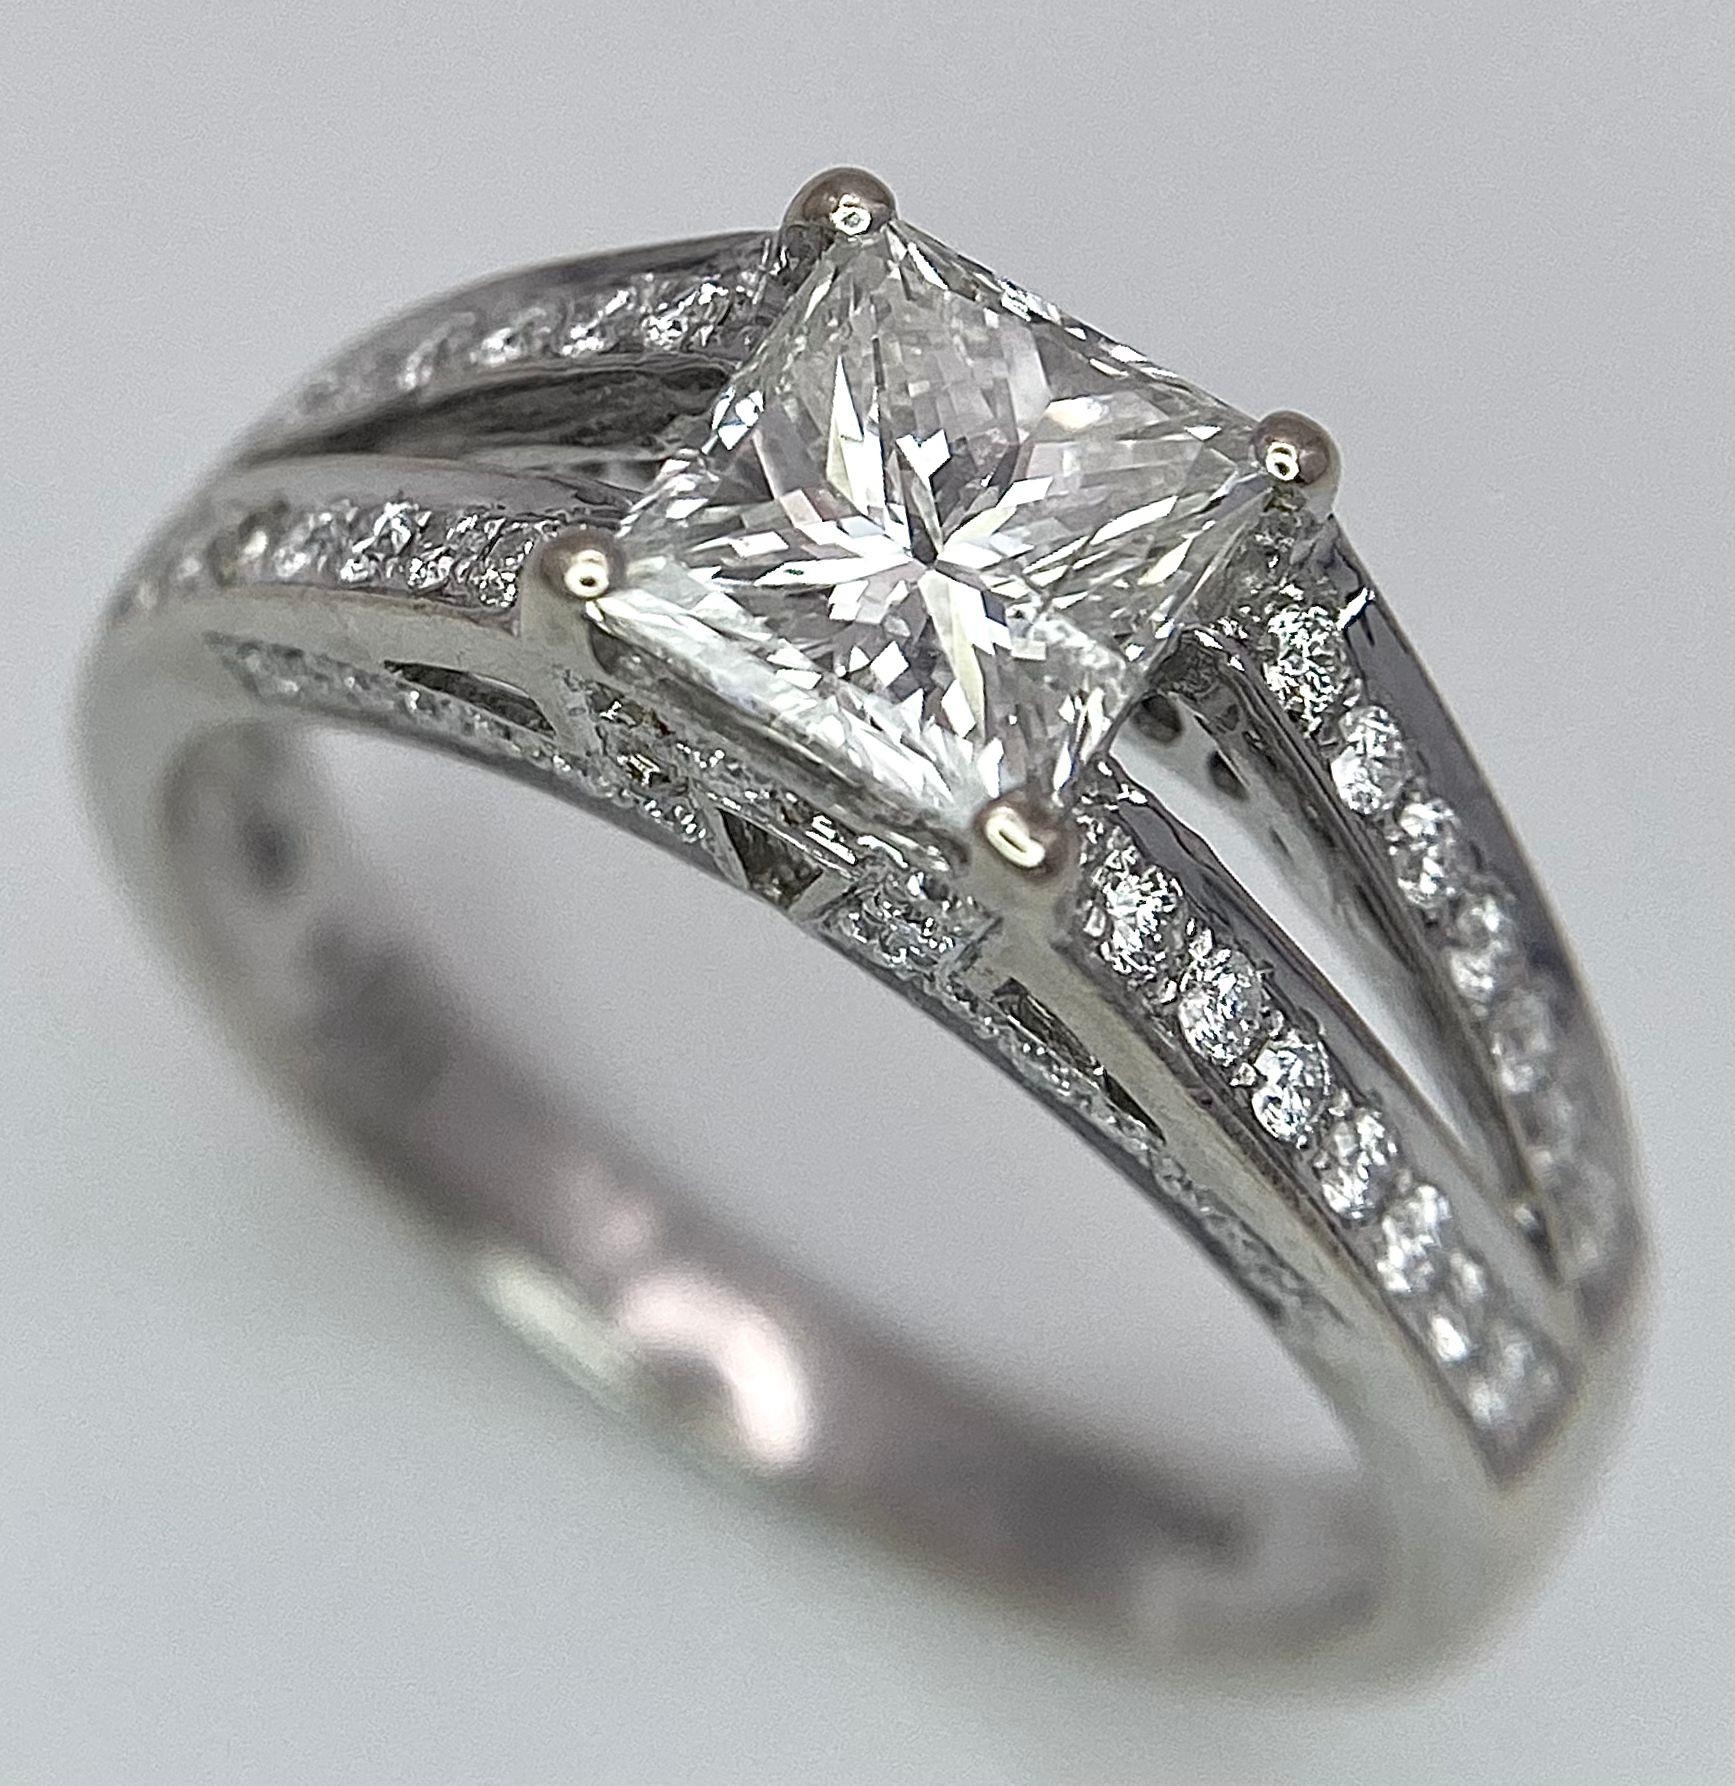 An 18K White Gold Diamond Ring. Central VS2 1ct Princess Cut Near White Diamond with Round Cut